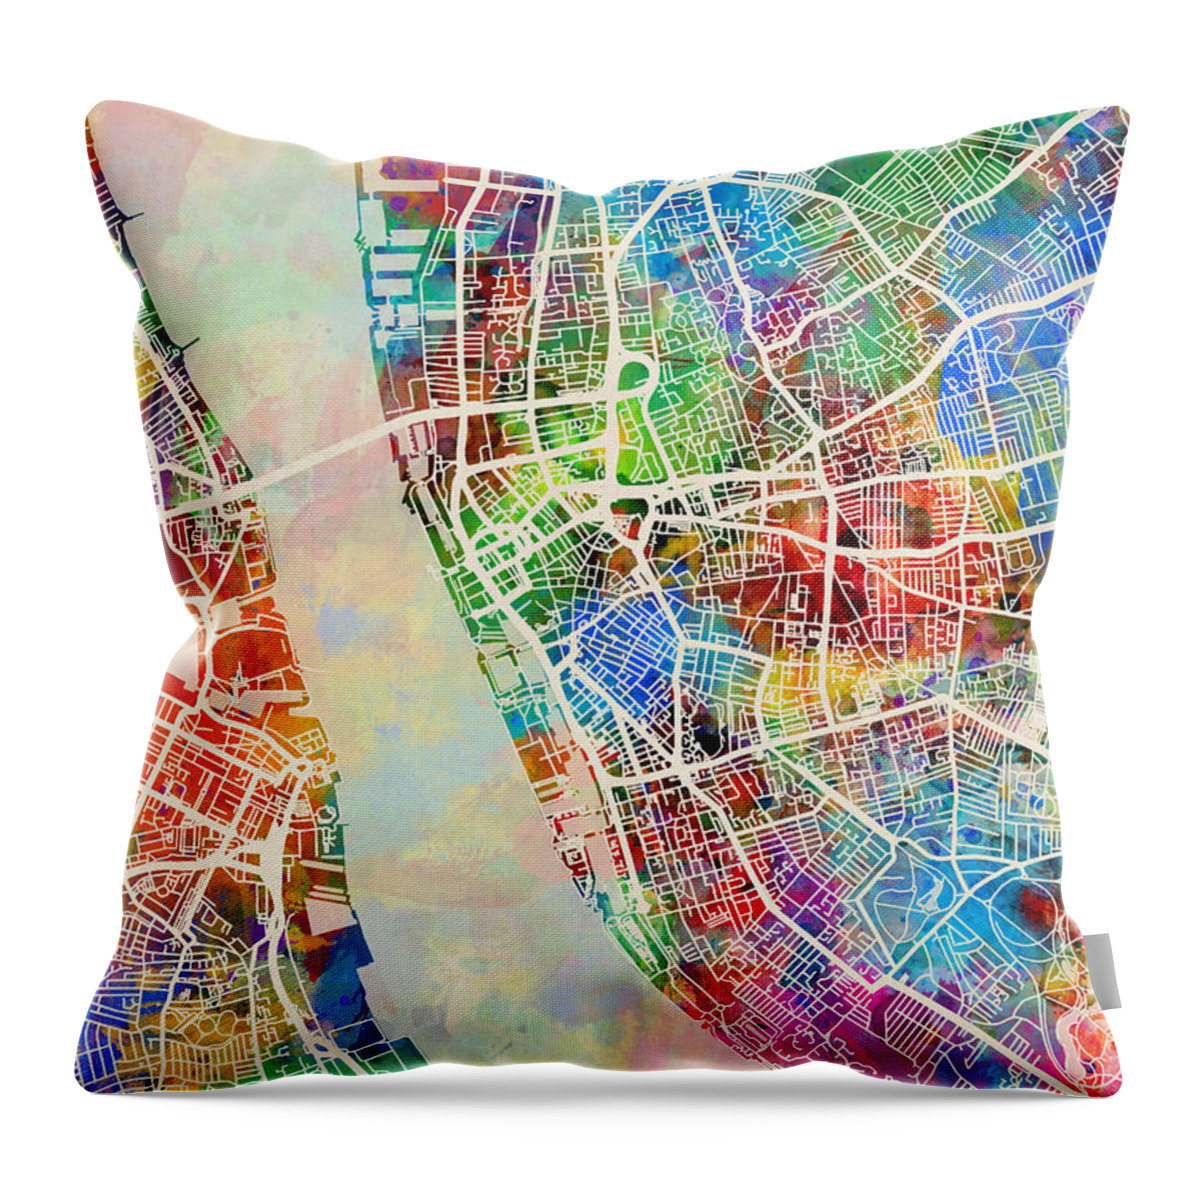 Liverpool Throw Pillow featuring the digital art Liverpool England Street Map by Michael Tompsett